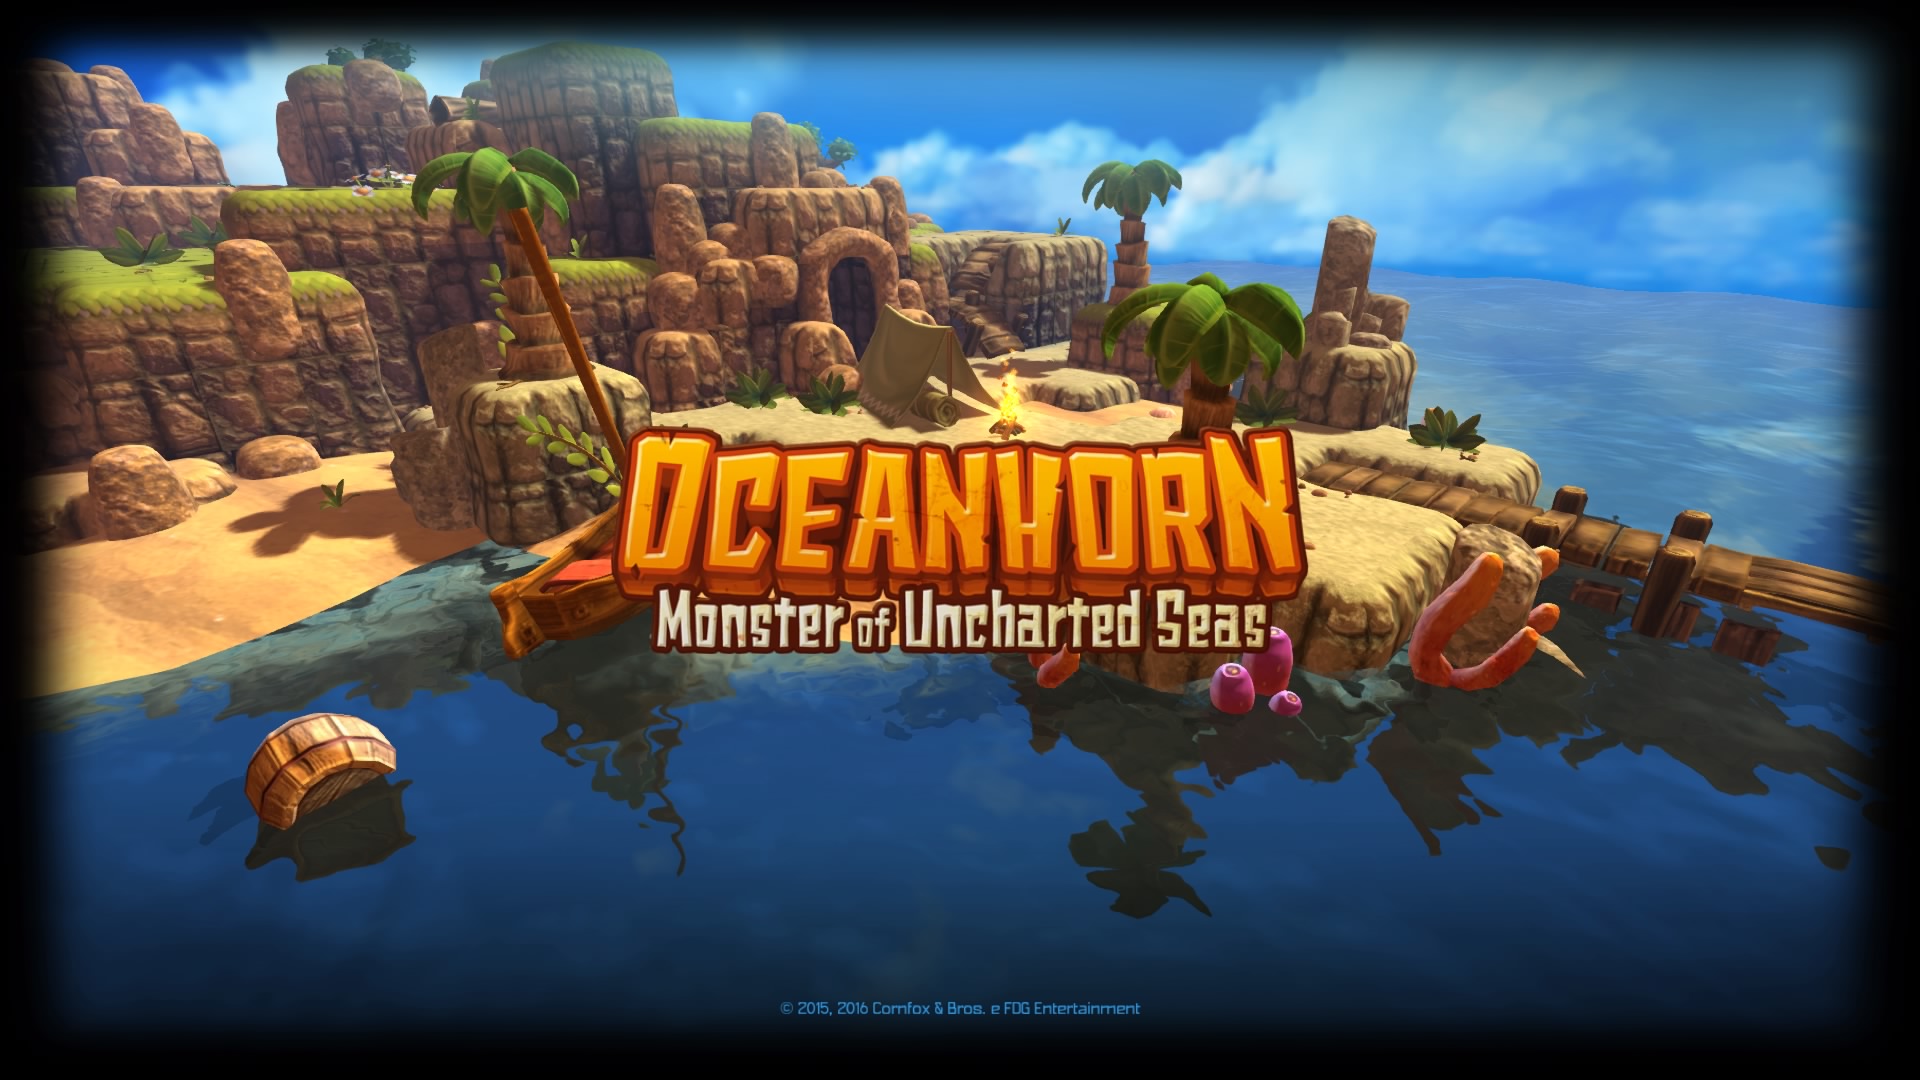 Oceanhorn: Monster of Uncharted Seas – Recensione